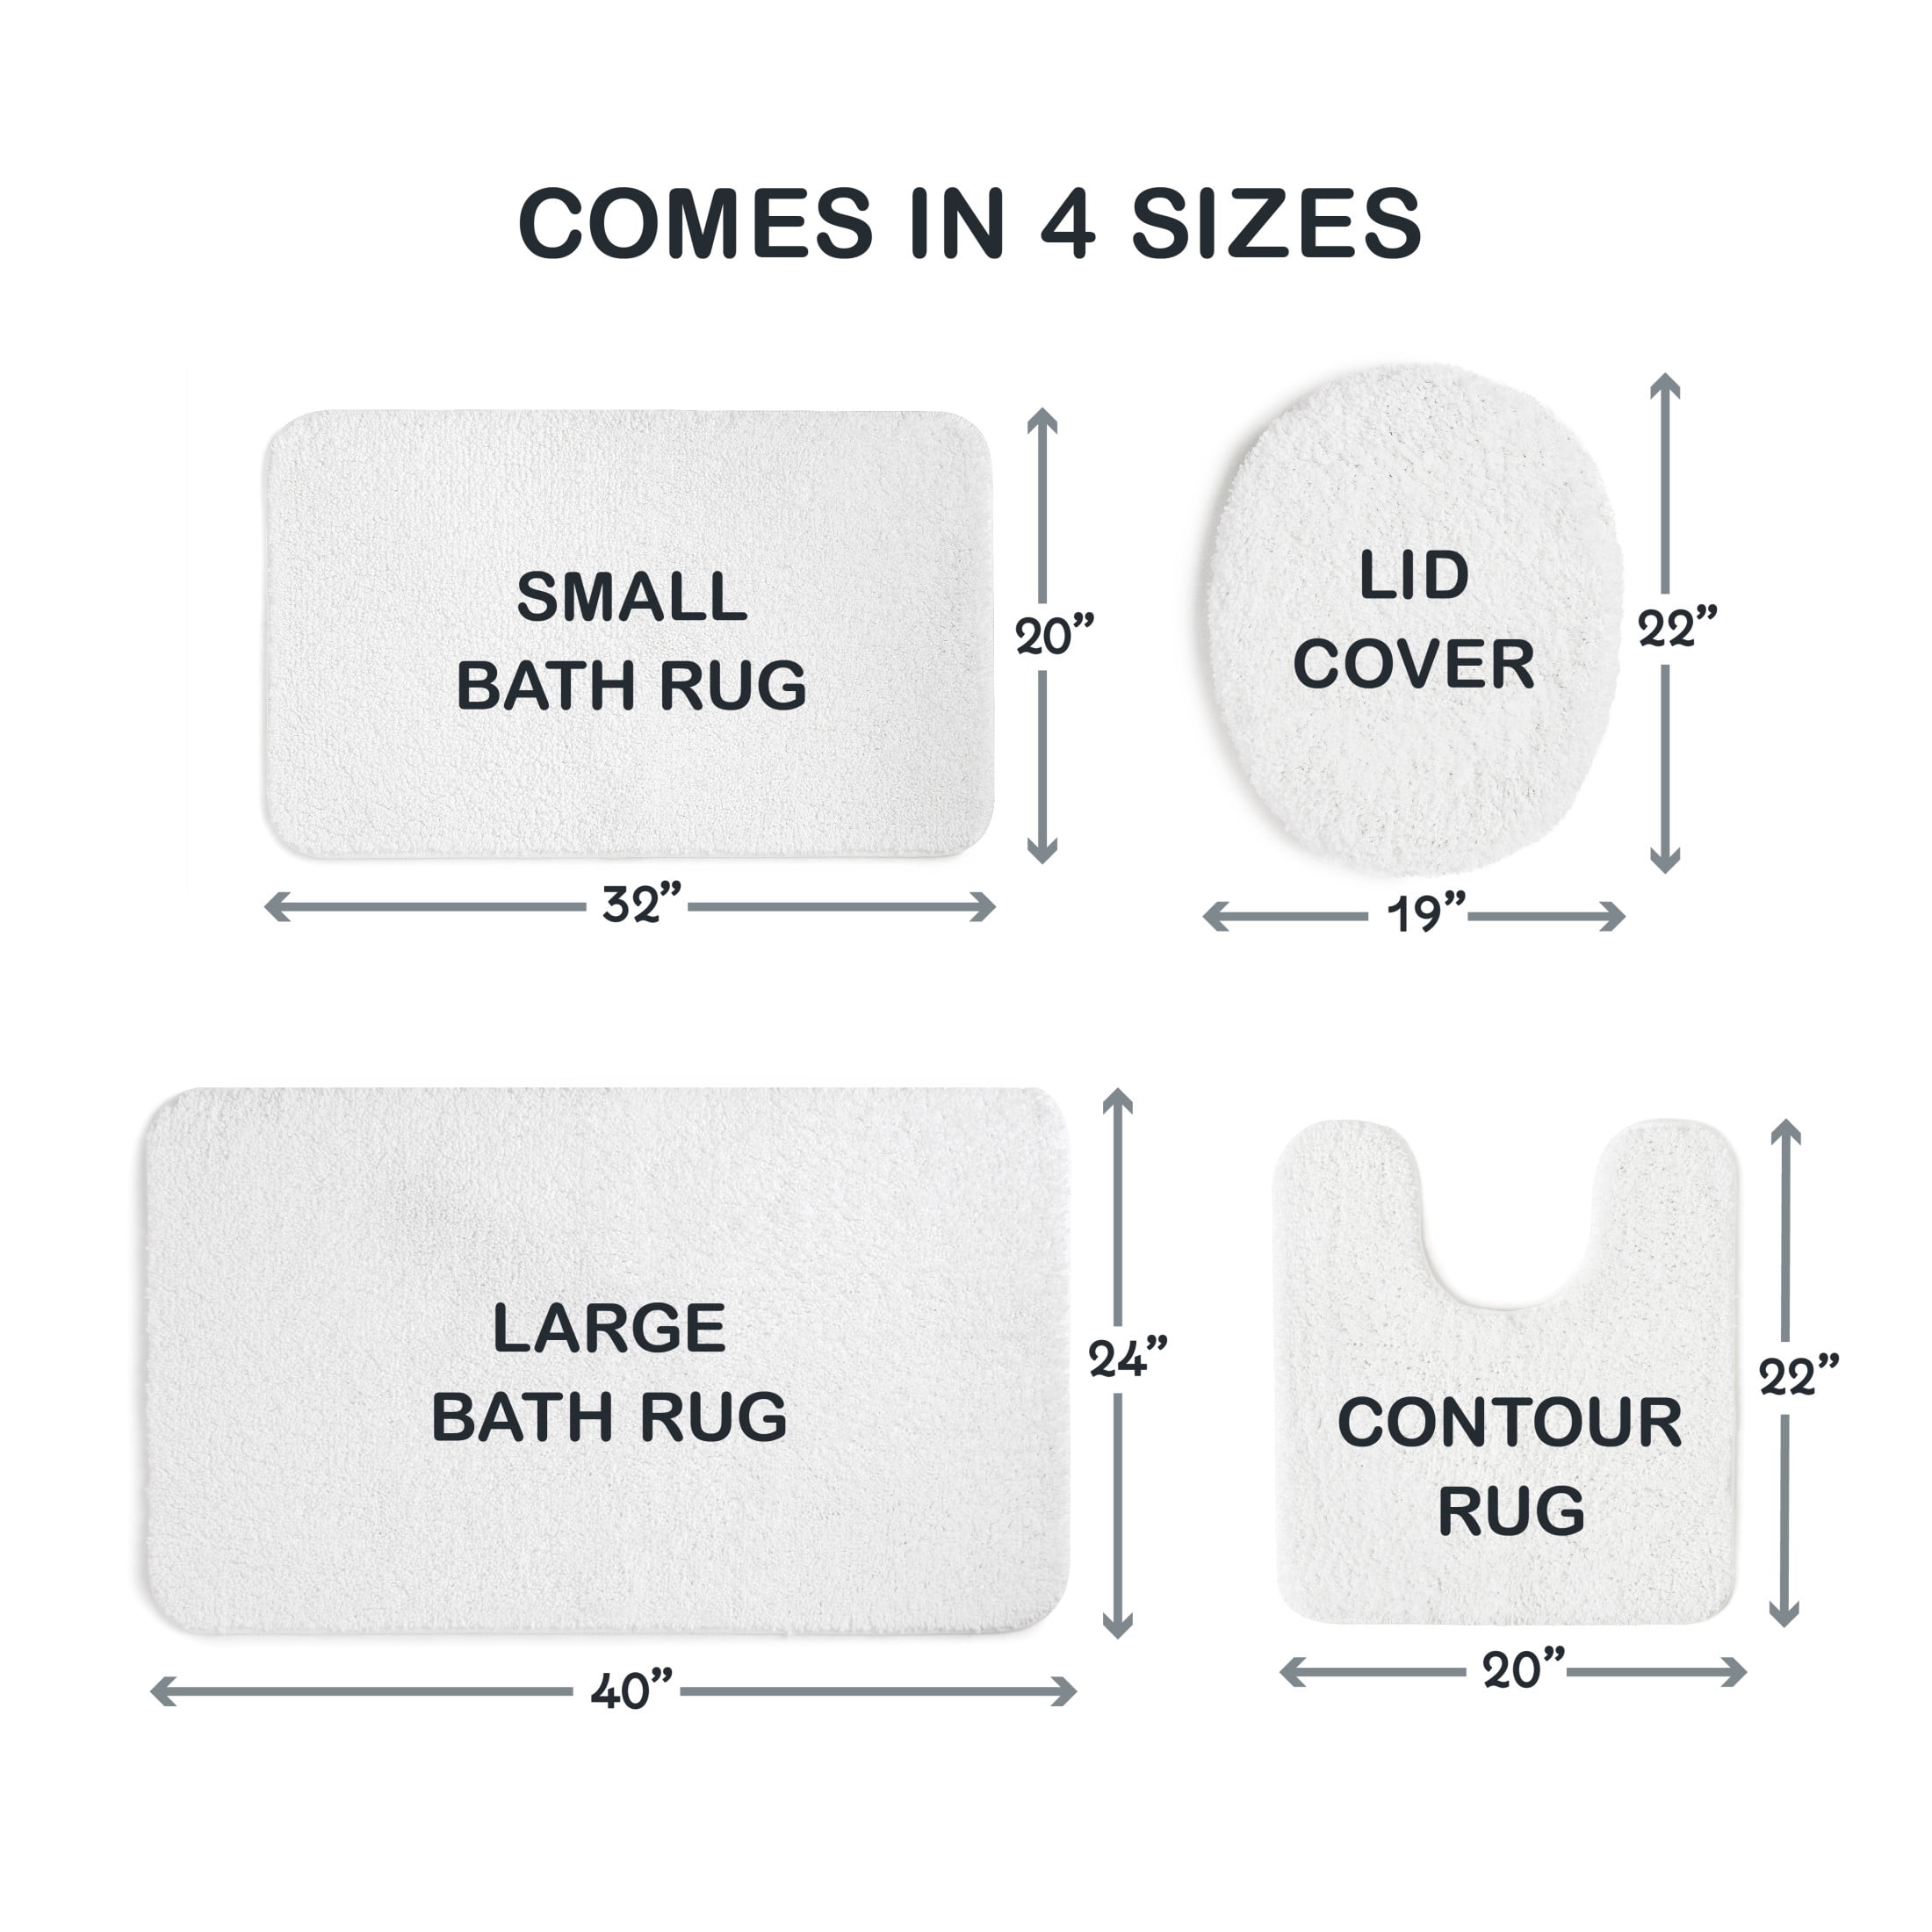 Mainstays Basic 2 Piece Polyester Bath Rug Set, 20 inch x 32 inch and 24 inch x 40 inch Bath Rug, Merlot Red, Size: 2 Piece (20 inchx32 inch and 24